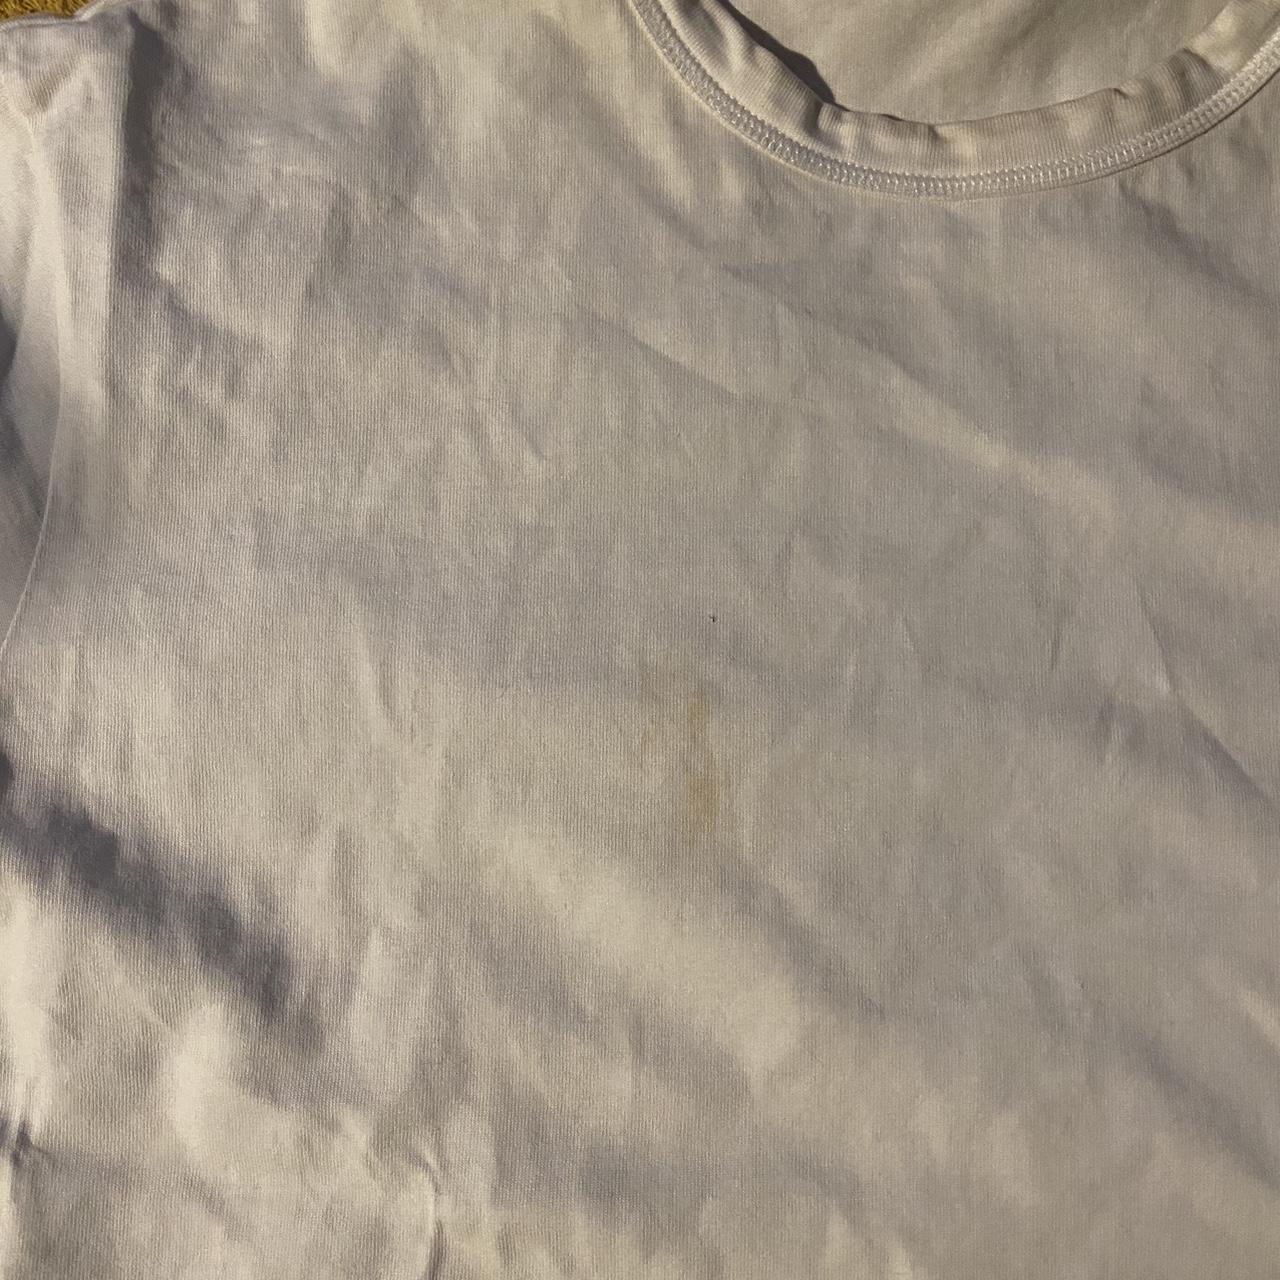 Details- COS plain white oversized tee shirt Minor... - Depop